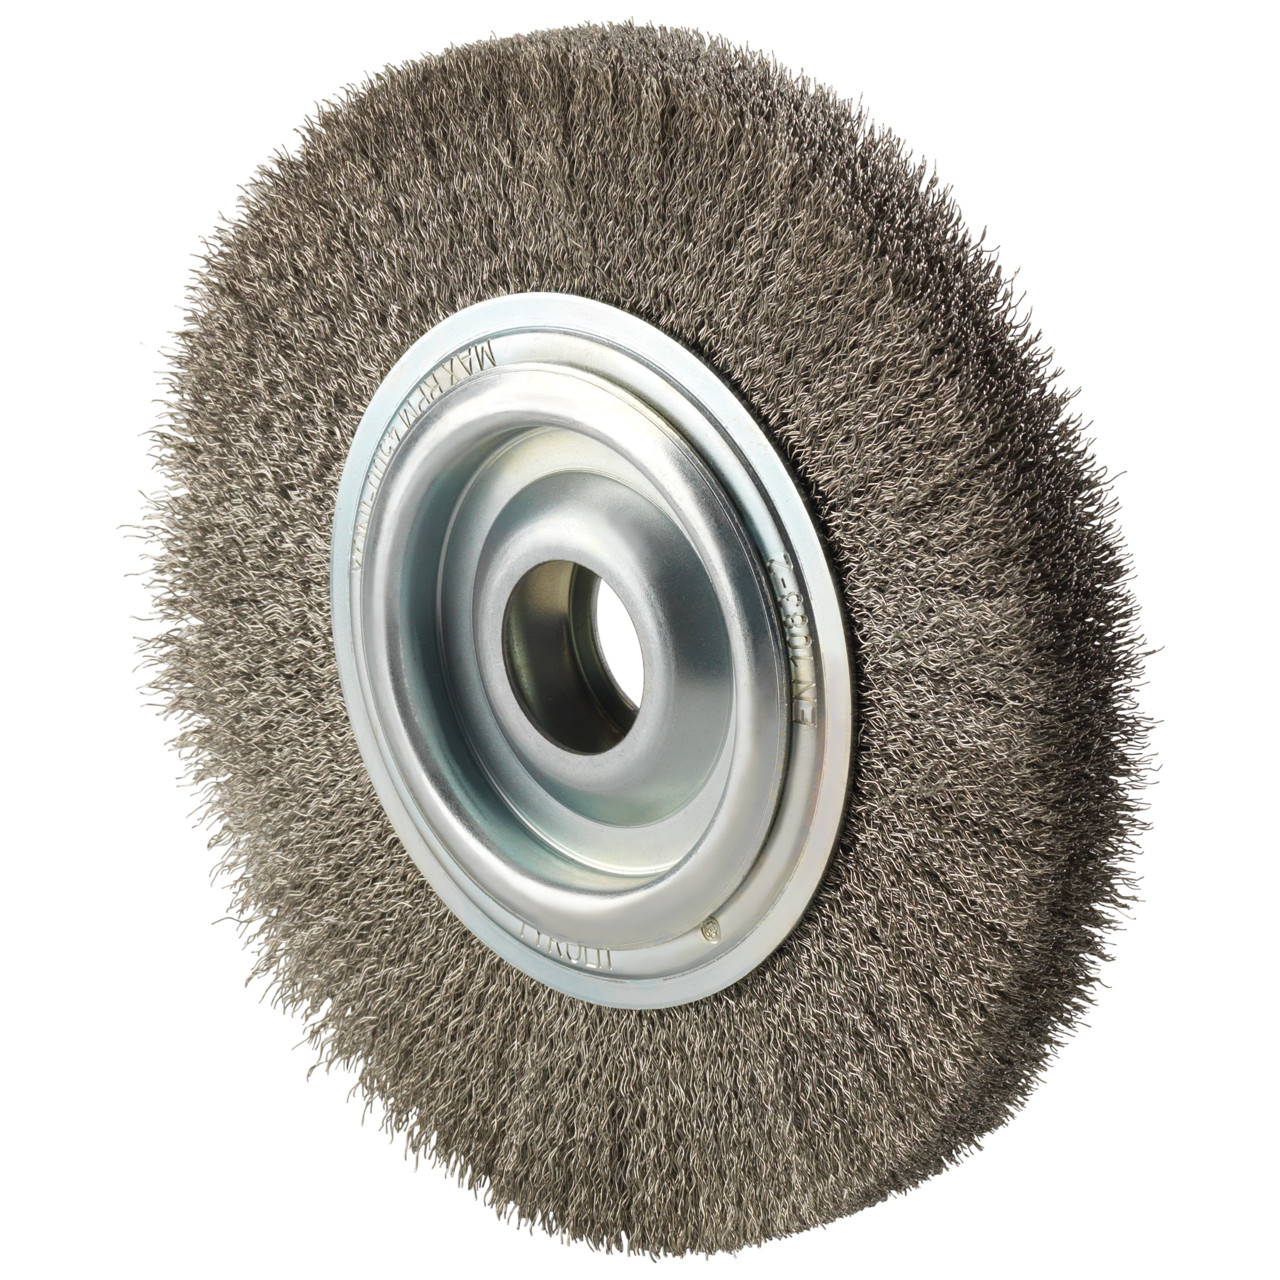 Spazzole rotonde Tyrolit DxLxH 125x24x36x20 Per acciaio inox, forma: 1RDW - (spazzole rotonde), Art. 896113